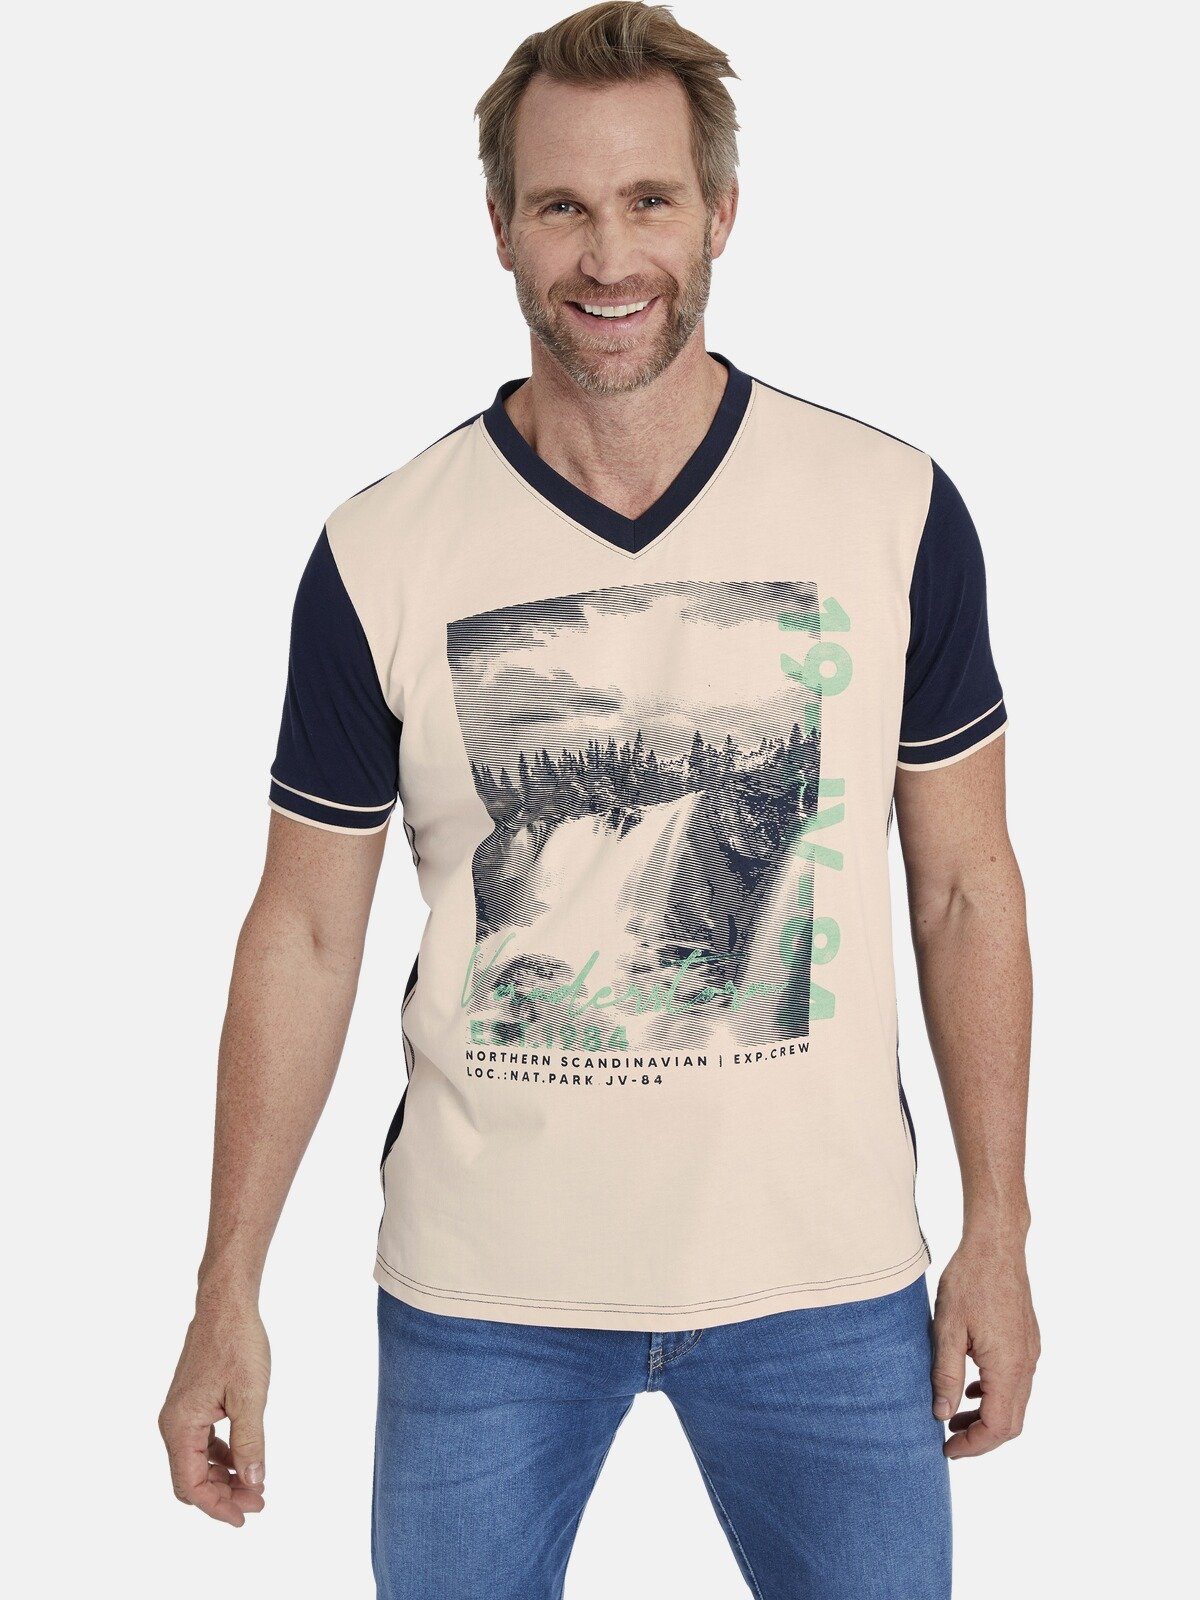 Jan Vanderstorm T-Shirt KISPING Rückenteil in Kontrastfarbe